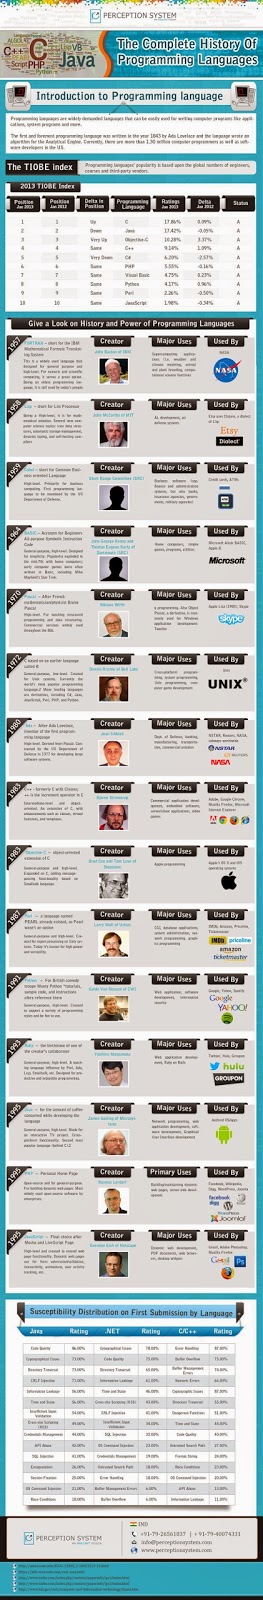 Top 10 Programming Language and creators